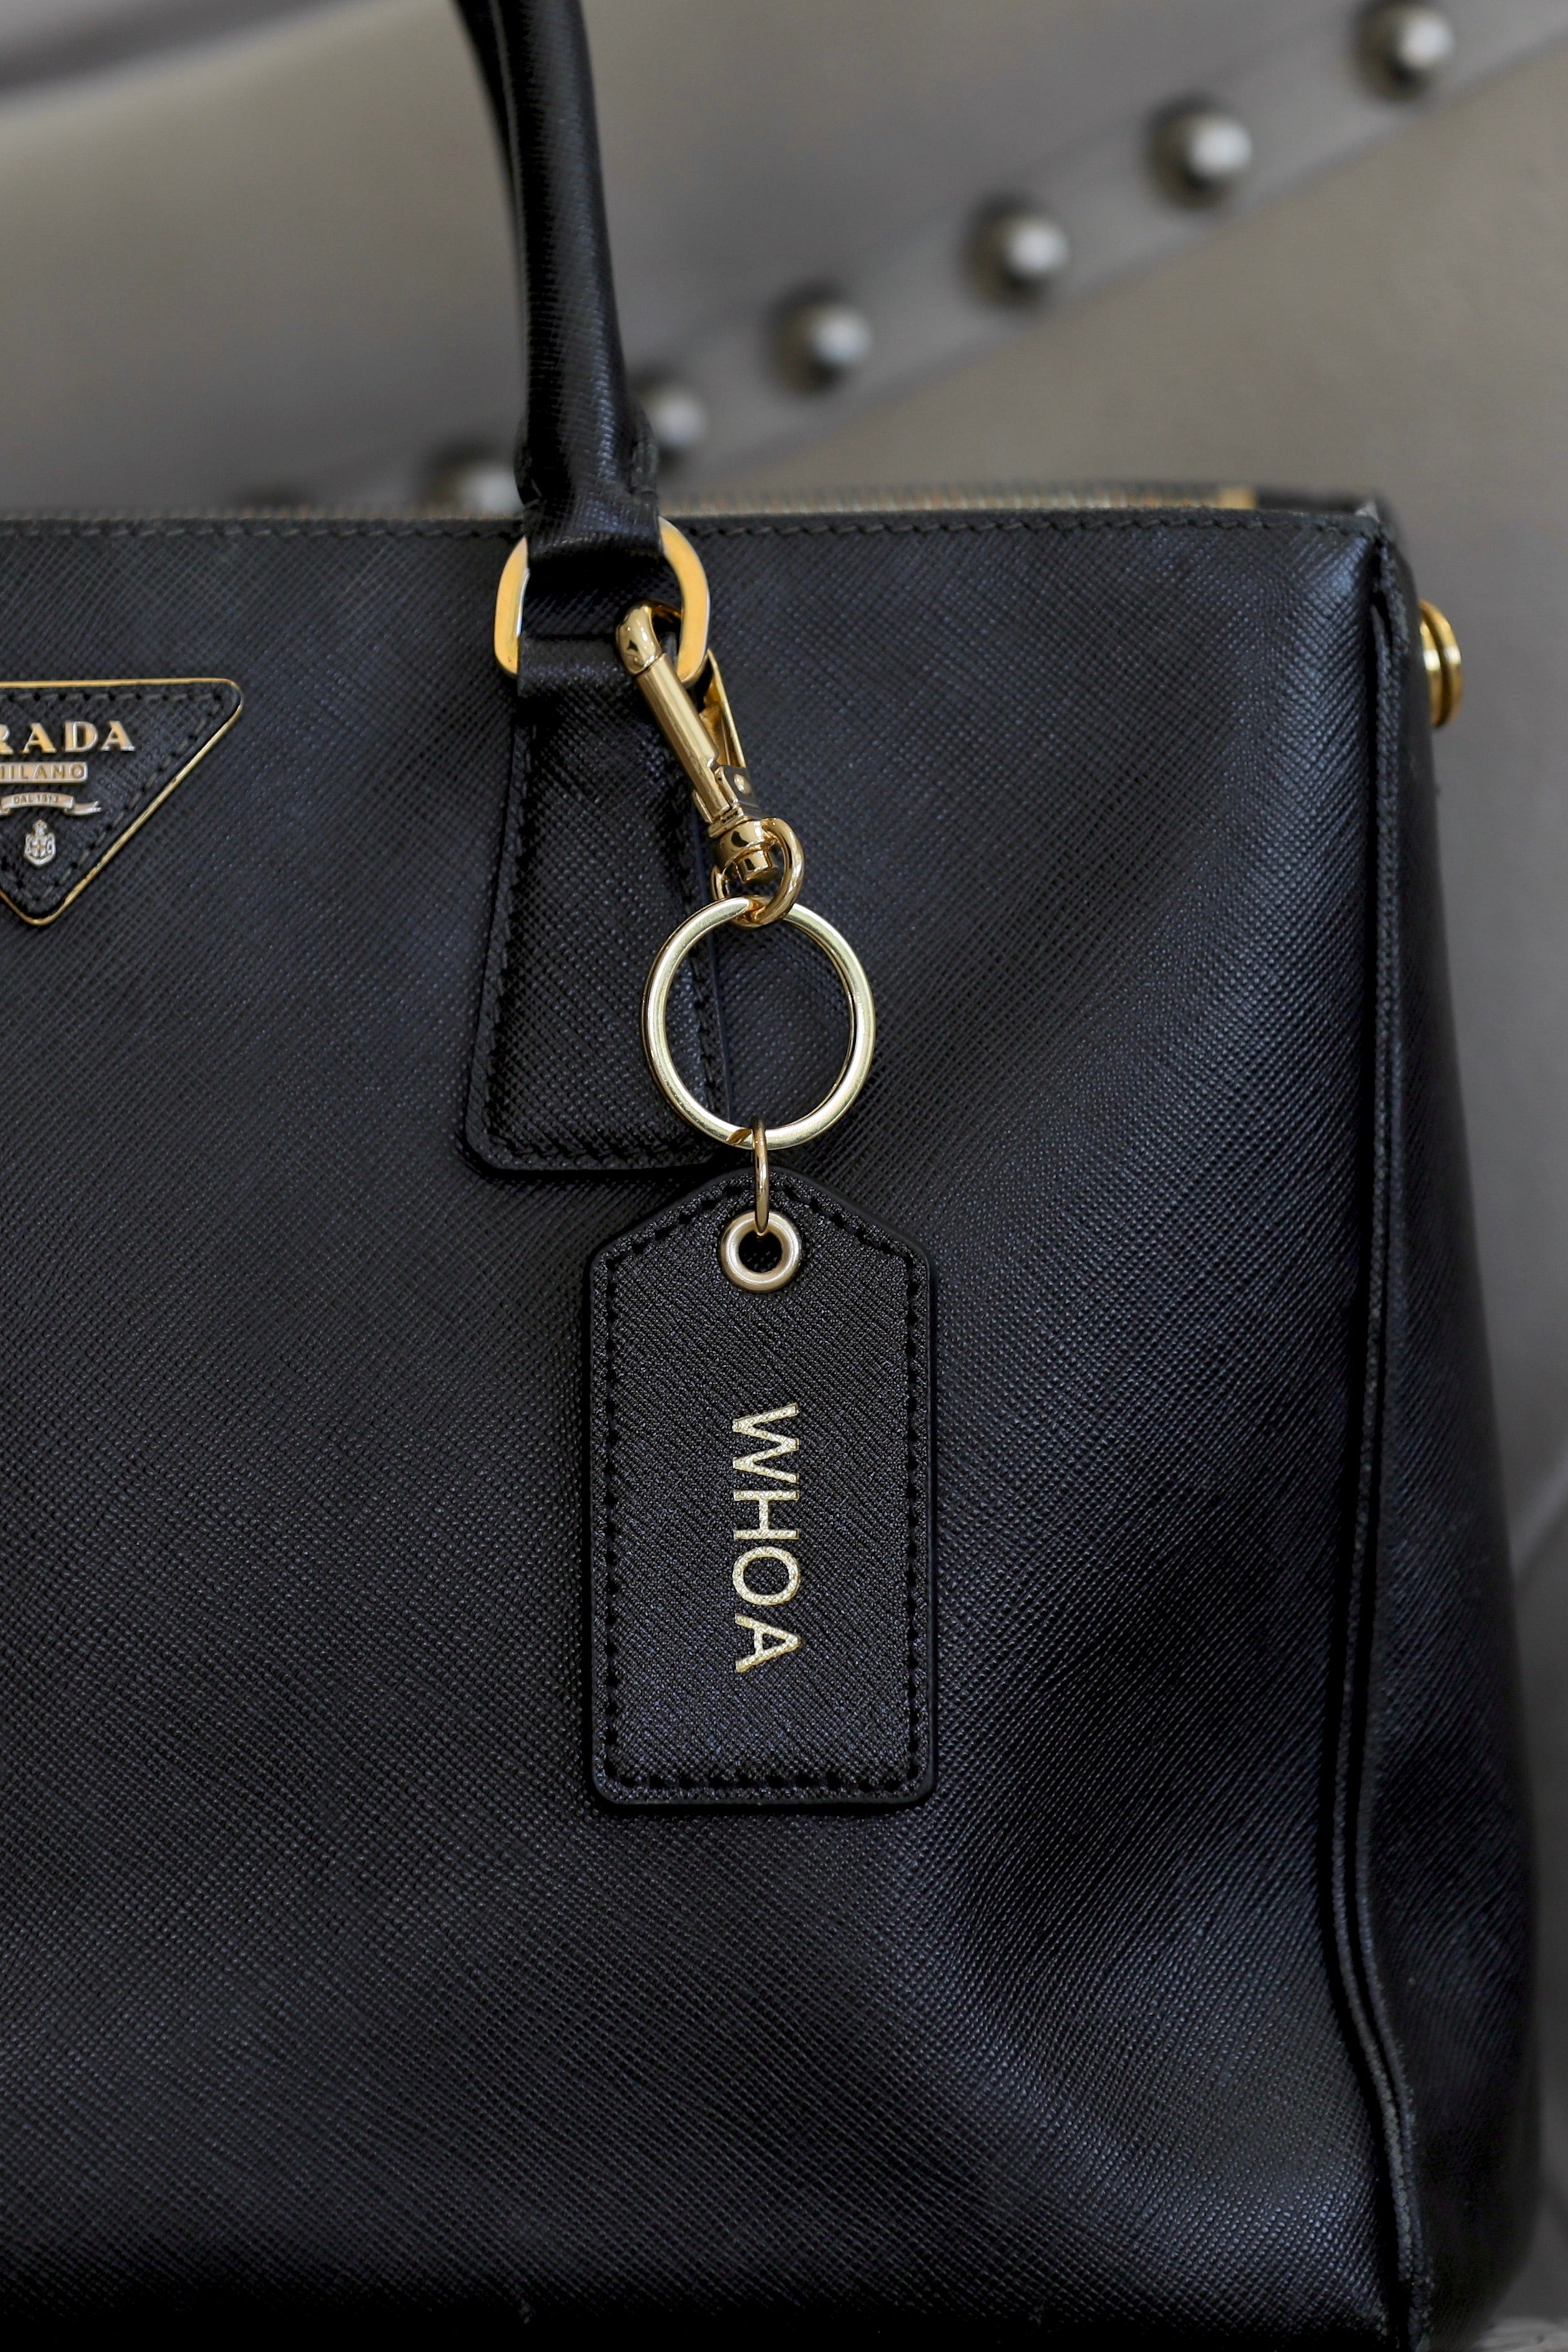 Black Prada Leather Ring Handbag